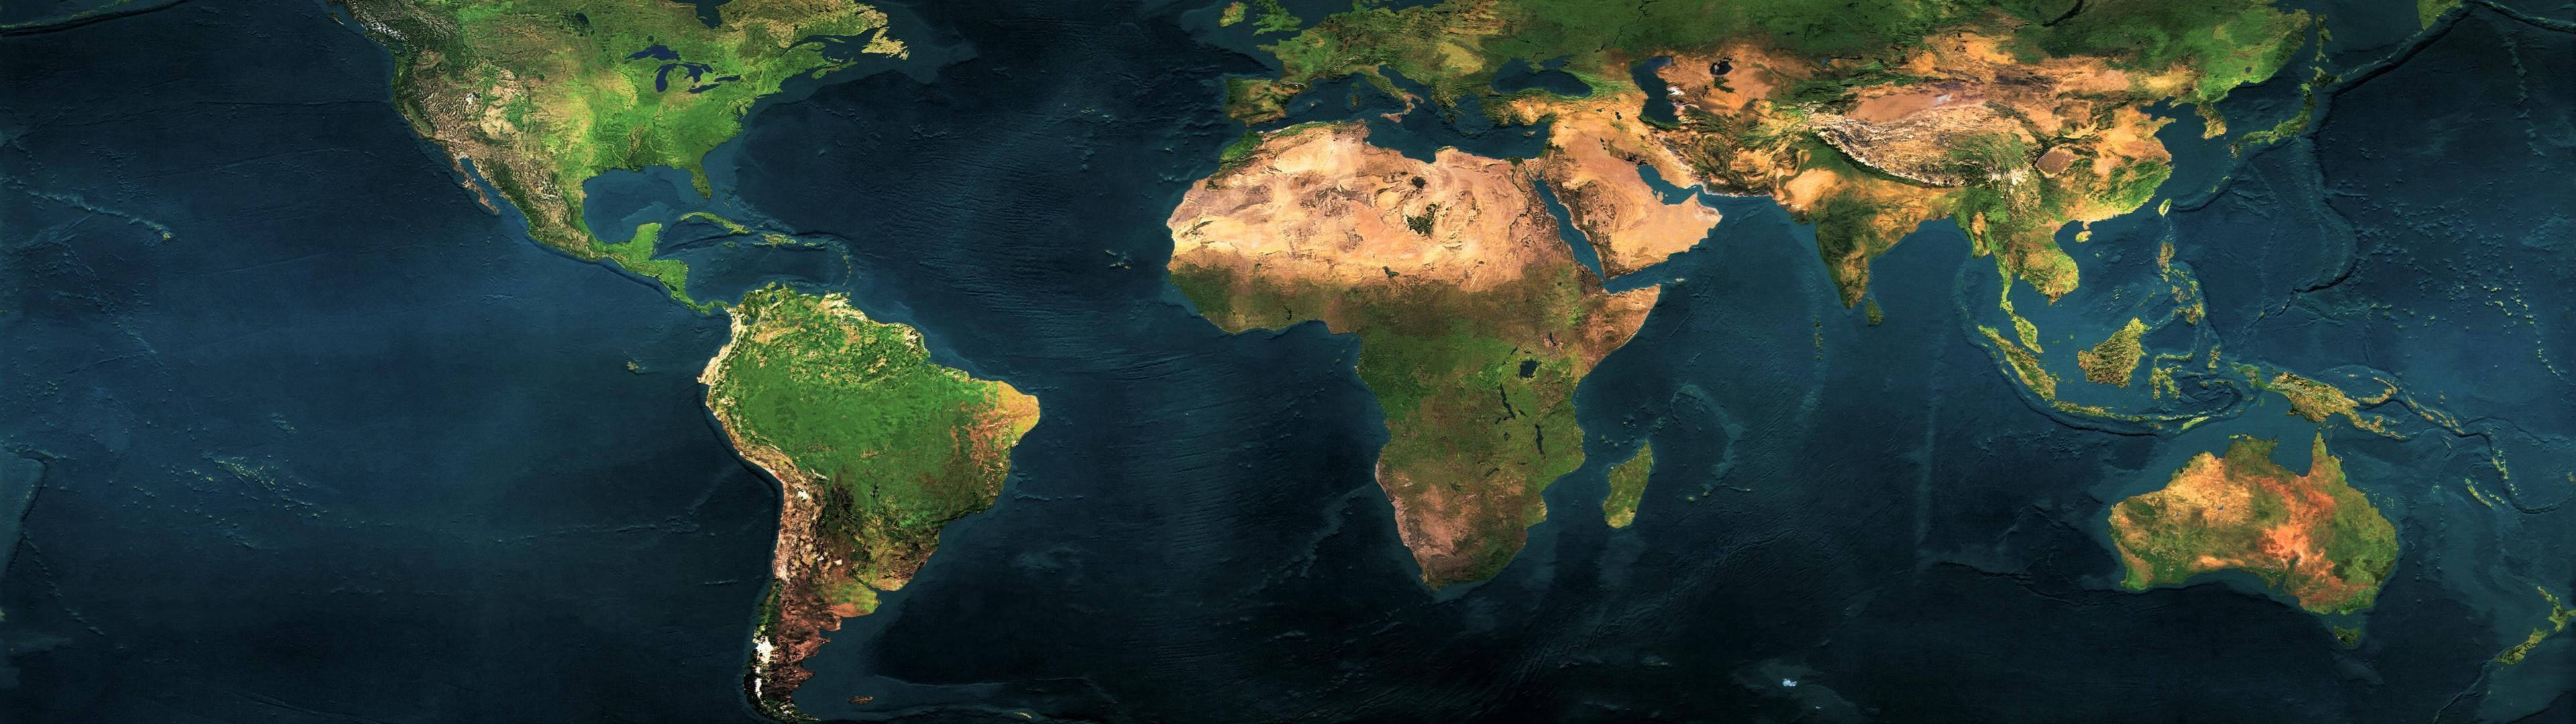 3840x1080 4k World Map Background